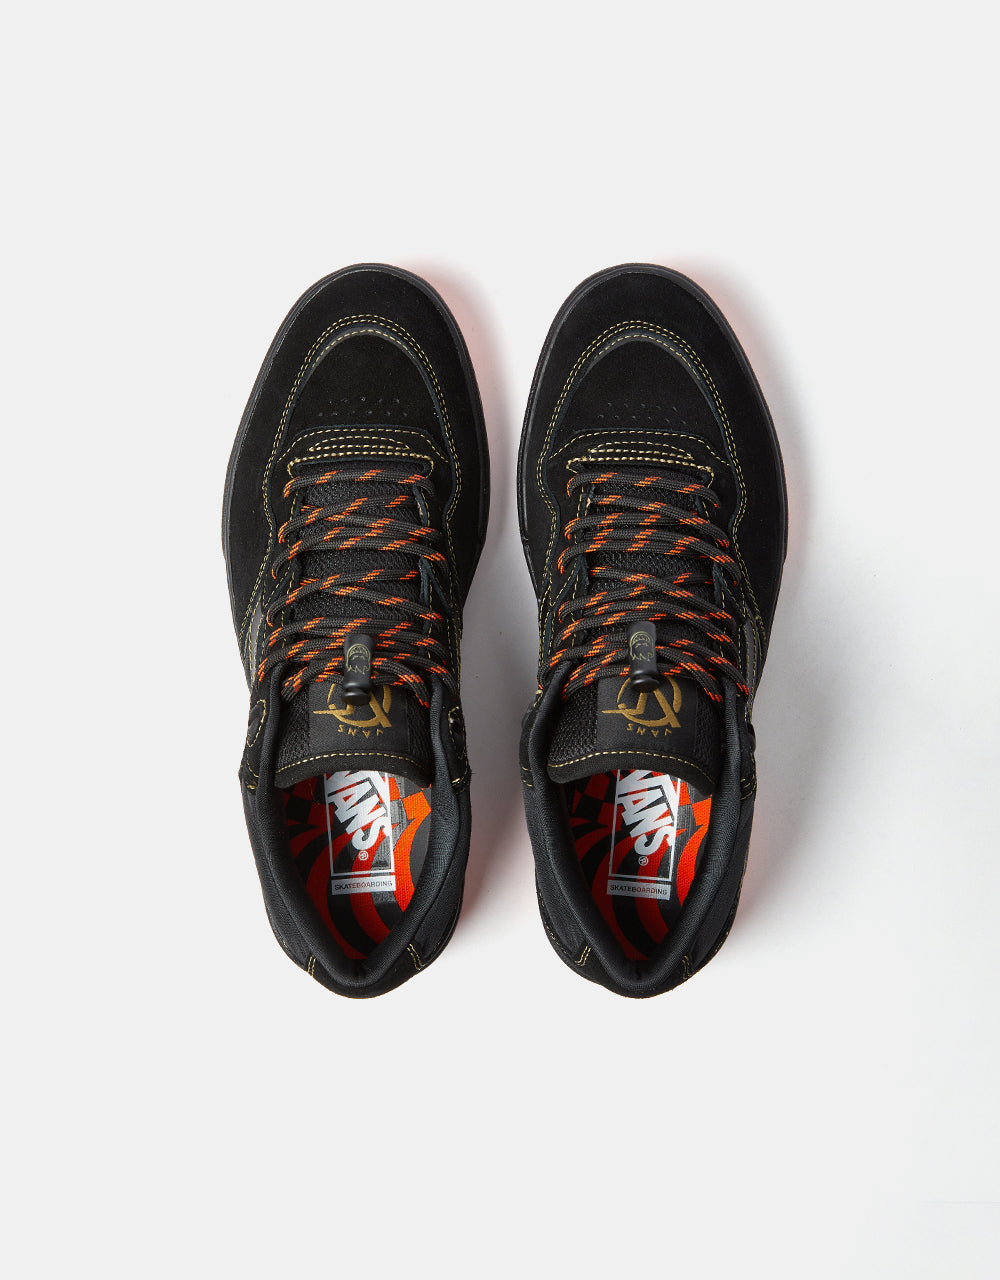 Vans Rowan 2 Skate Shoes - (Spitfire) Black/Flame